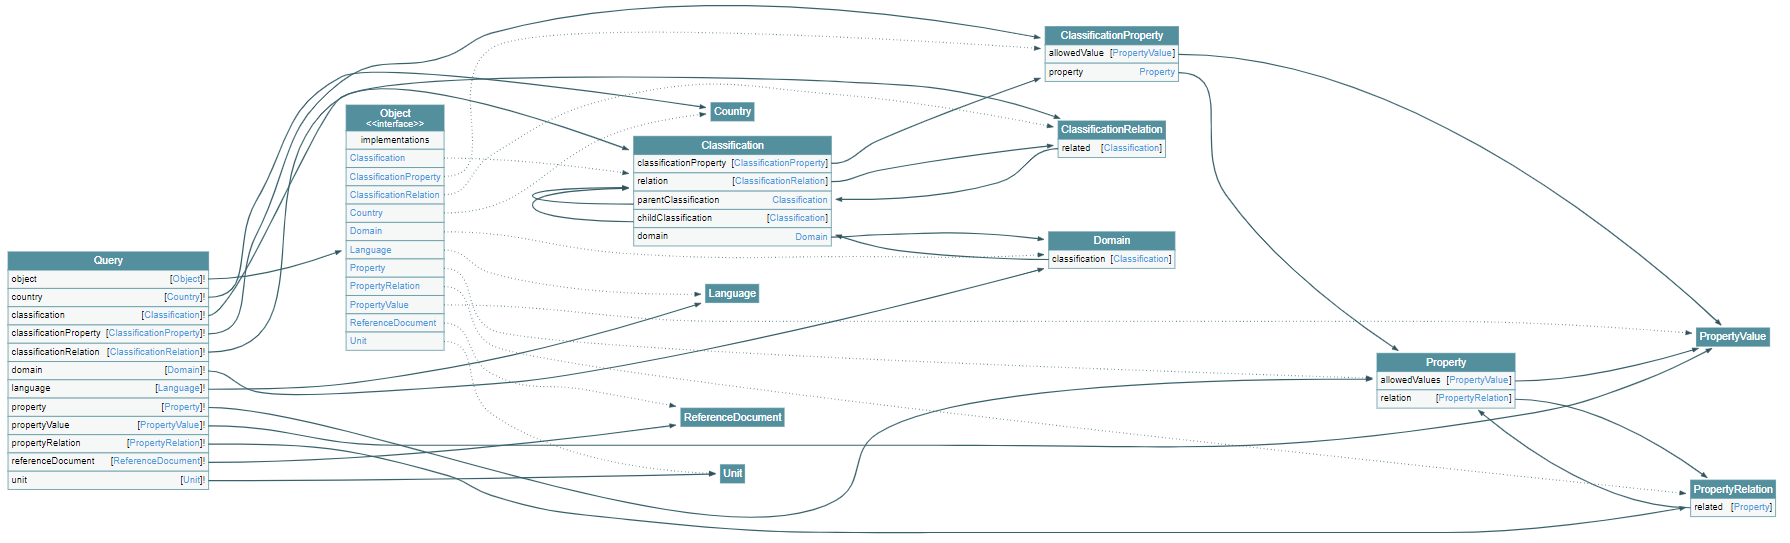 Refactored bSDD GraphQL Schema: Overview (uncheck "Show leaf fields")